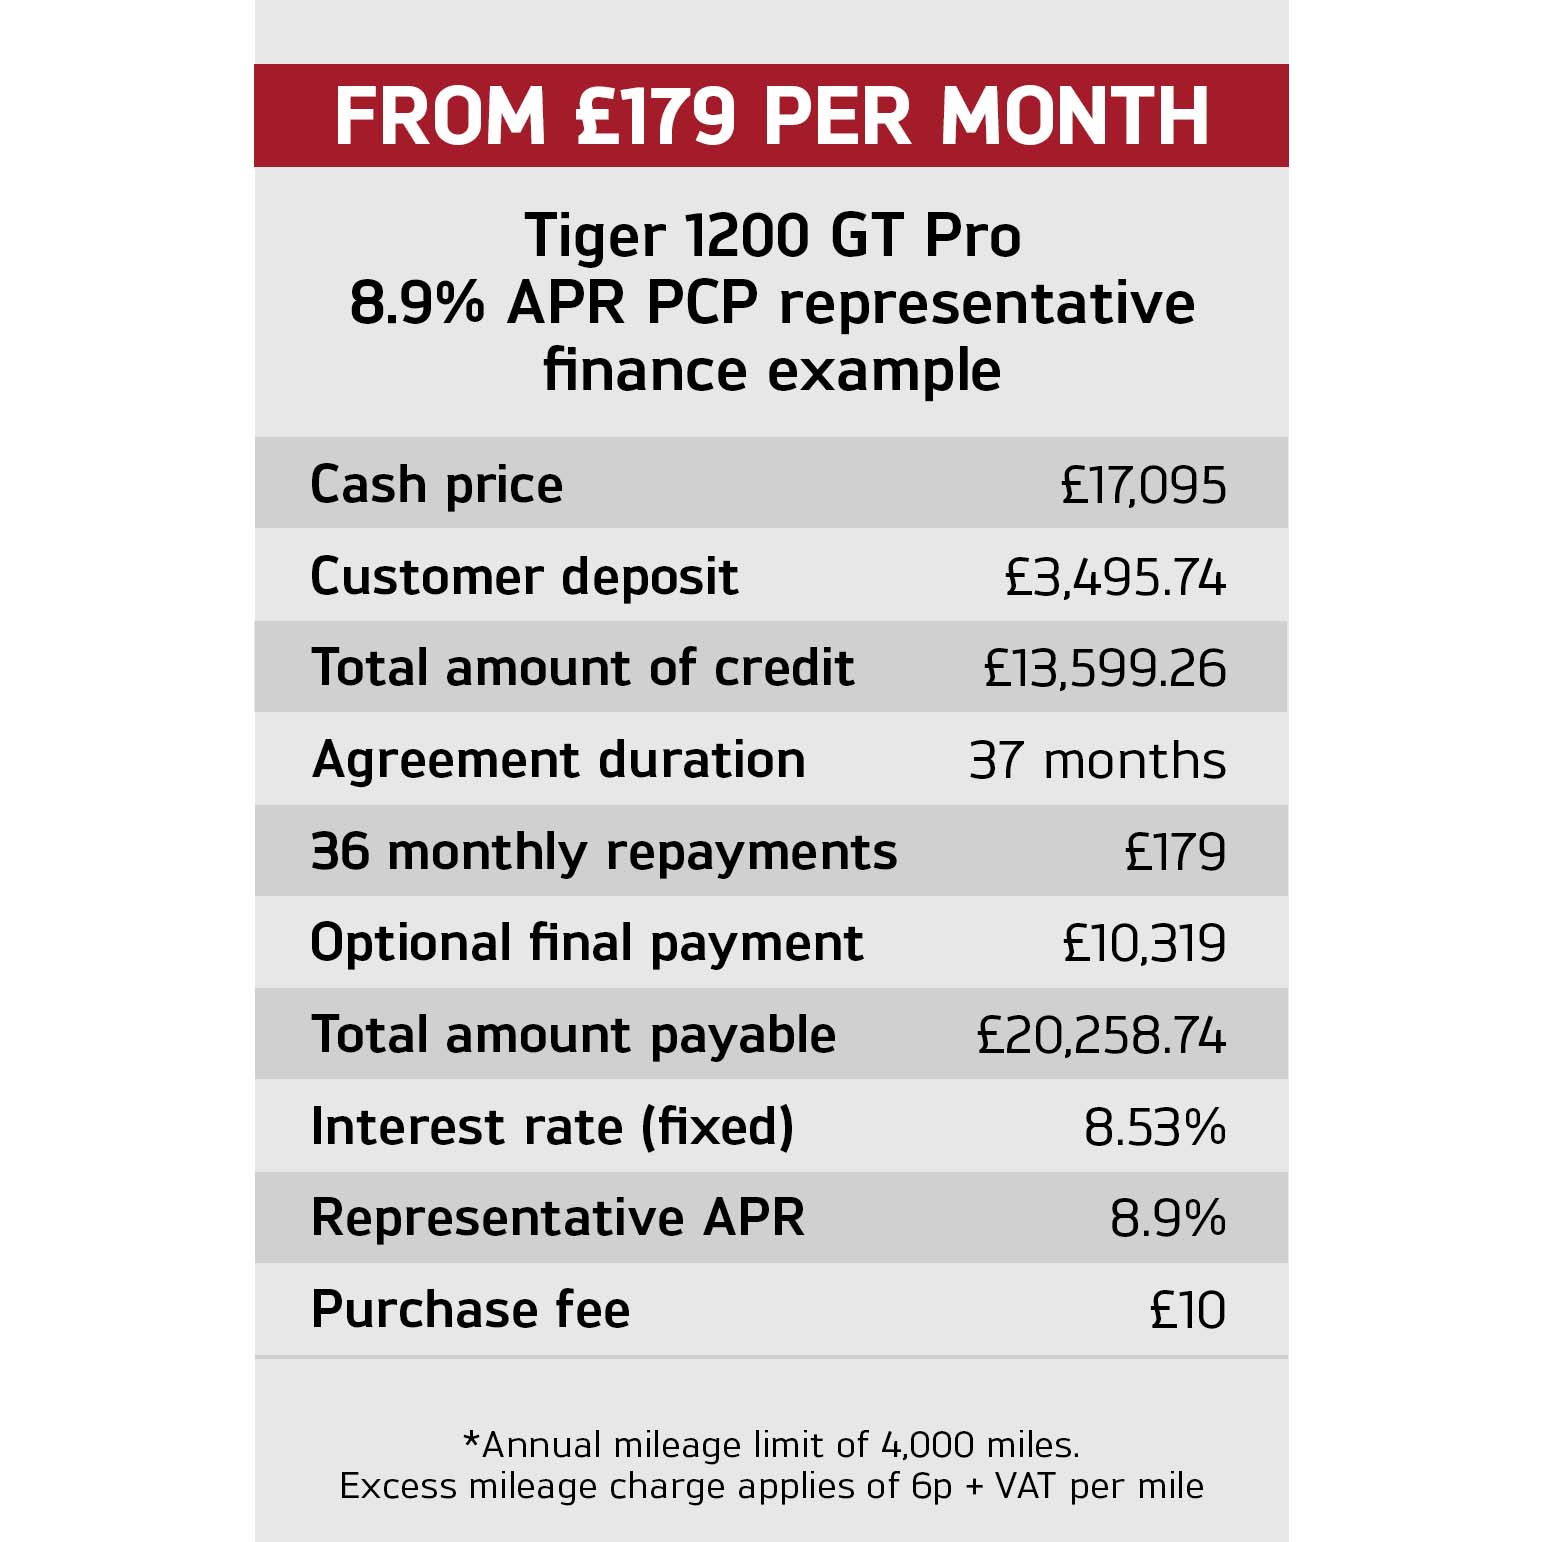 Triumph Tiger 1200 Family Finance Offer - Enjoy 8.9% APR Representative Finance PLUS a £1,500 personalisation voucher.